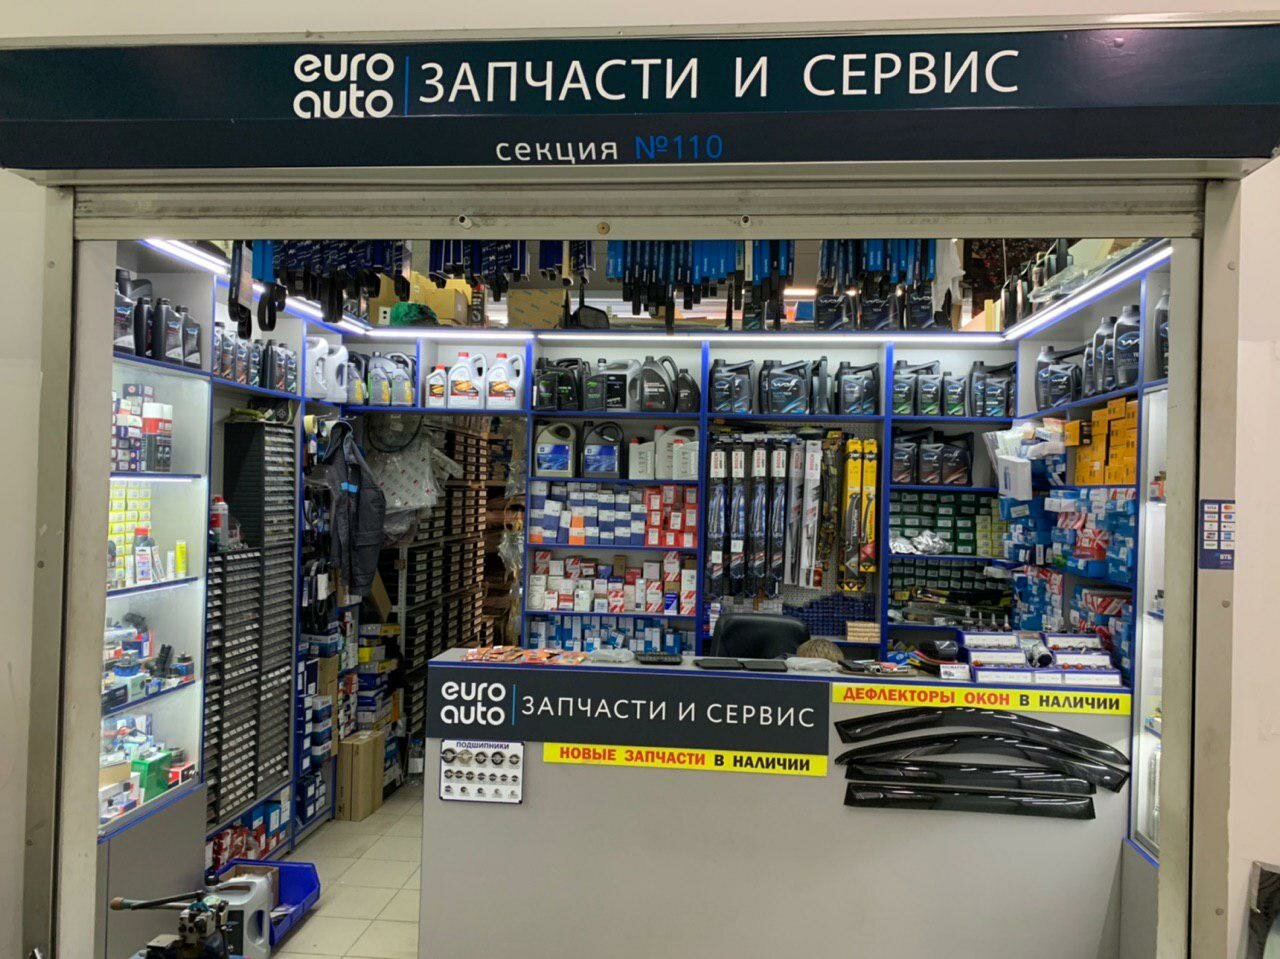 Euroauto Ru Интернет Магазин